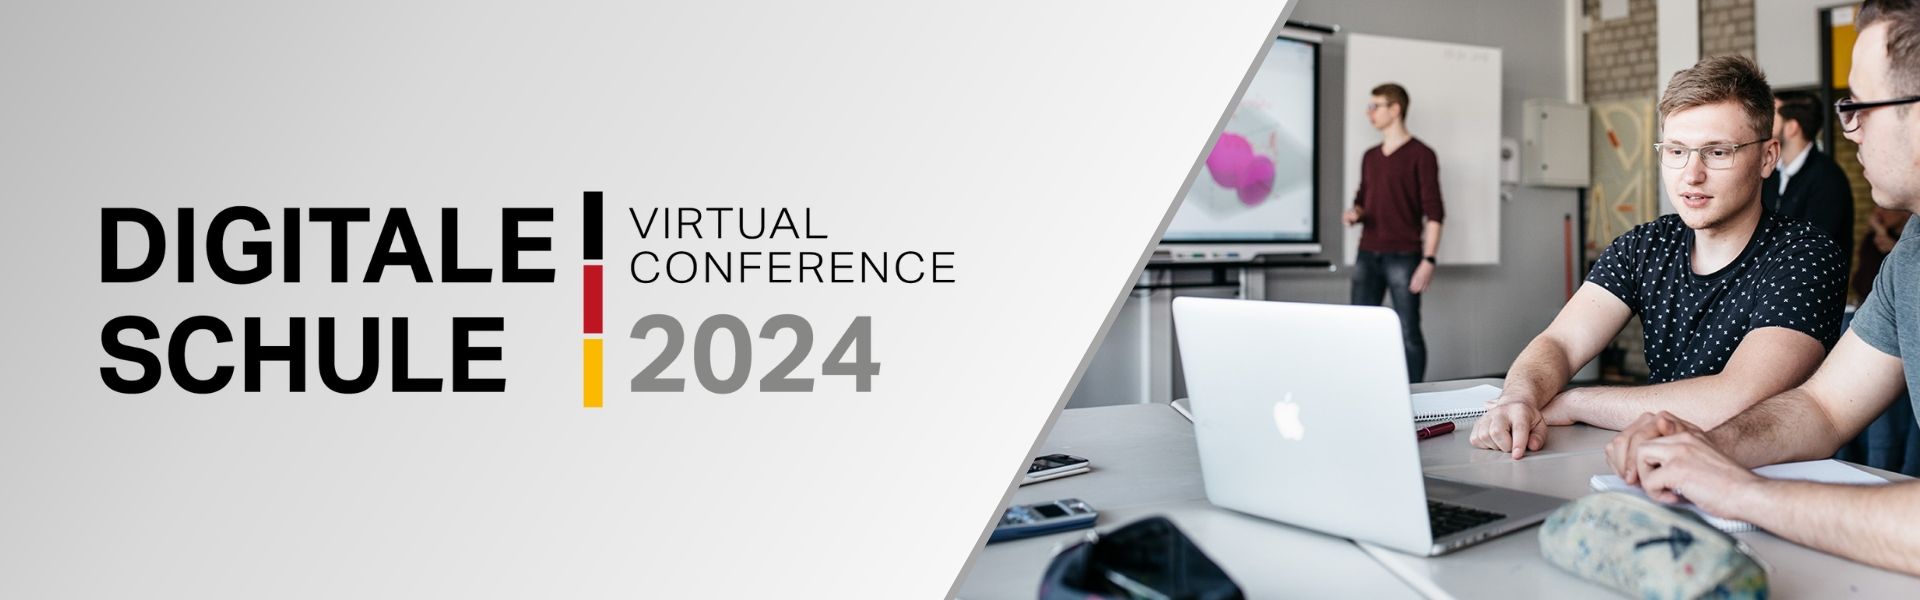 DigitalPakt Schule Virtual Conference